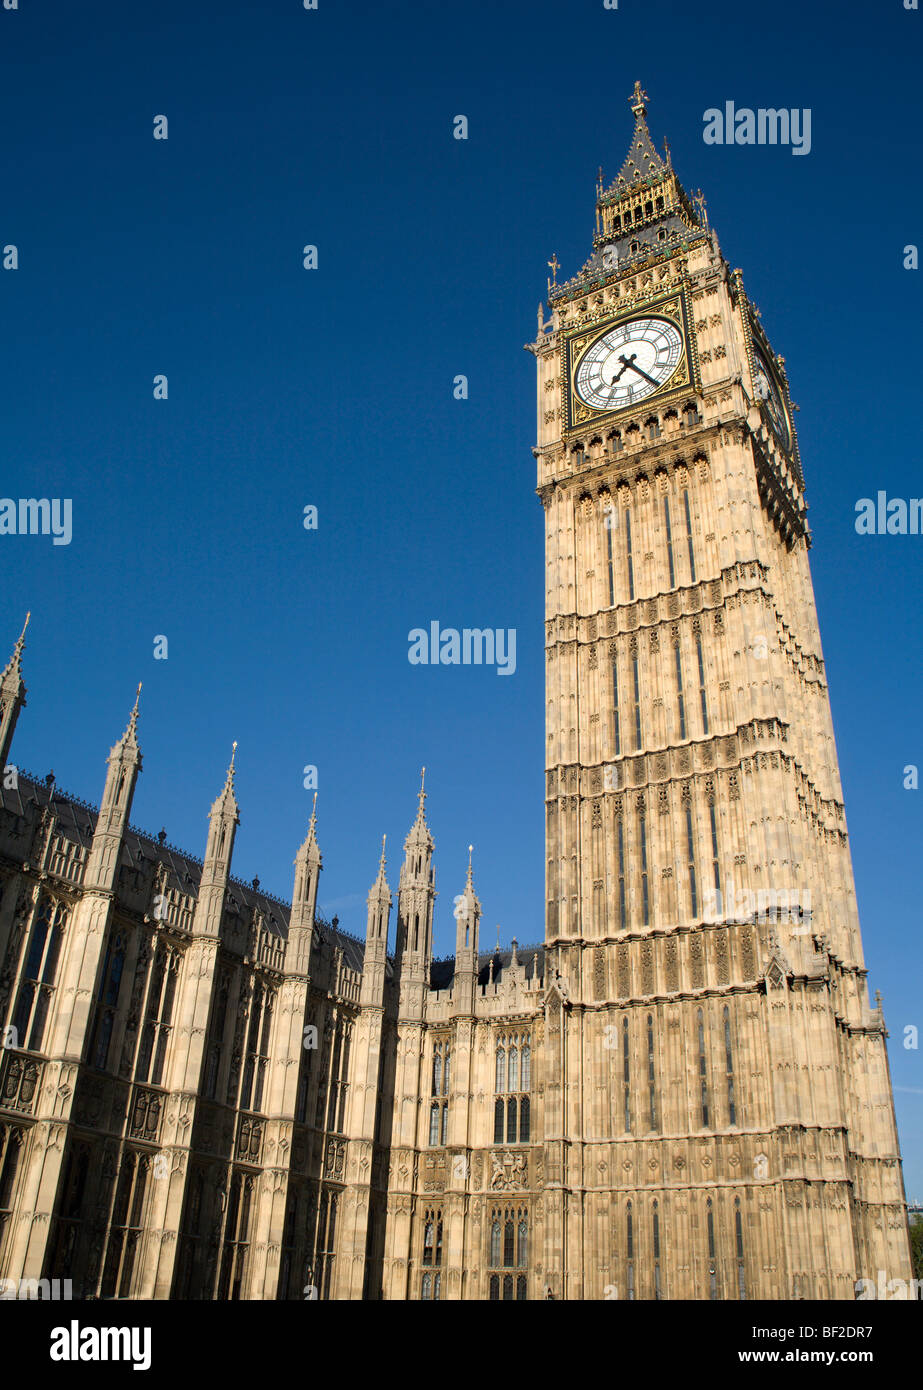 London - Big Ben - parliament Stock Photo